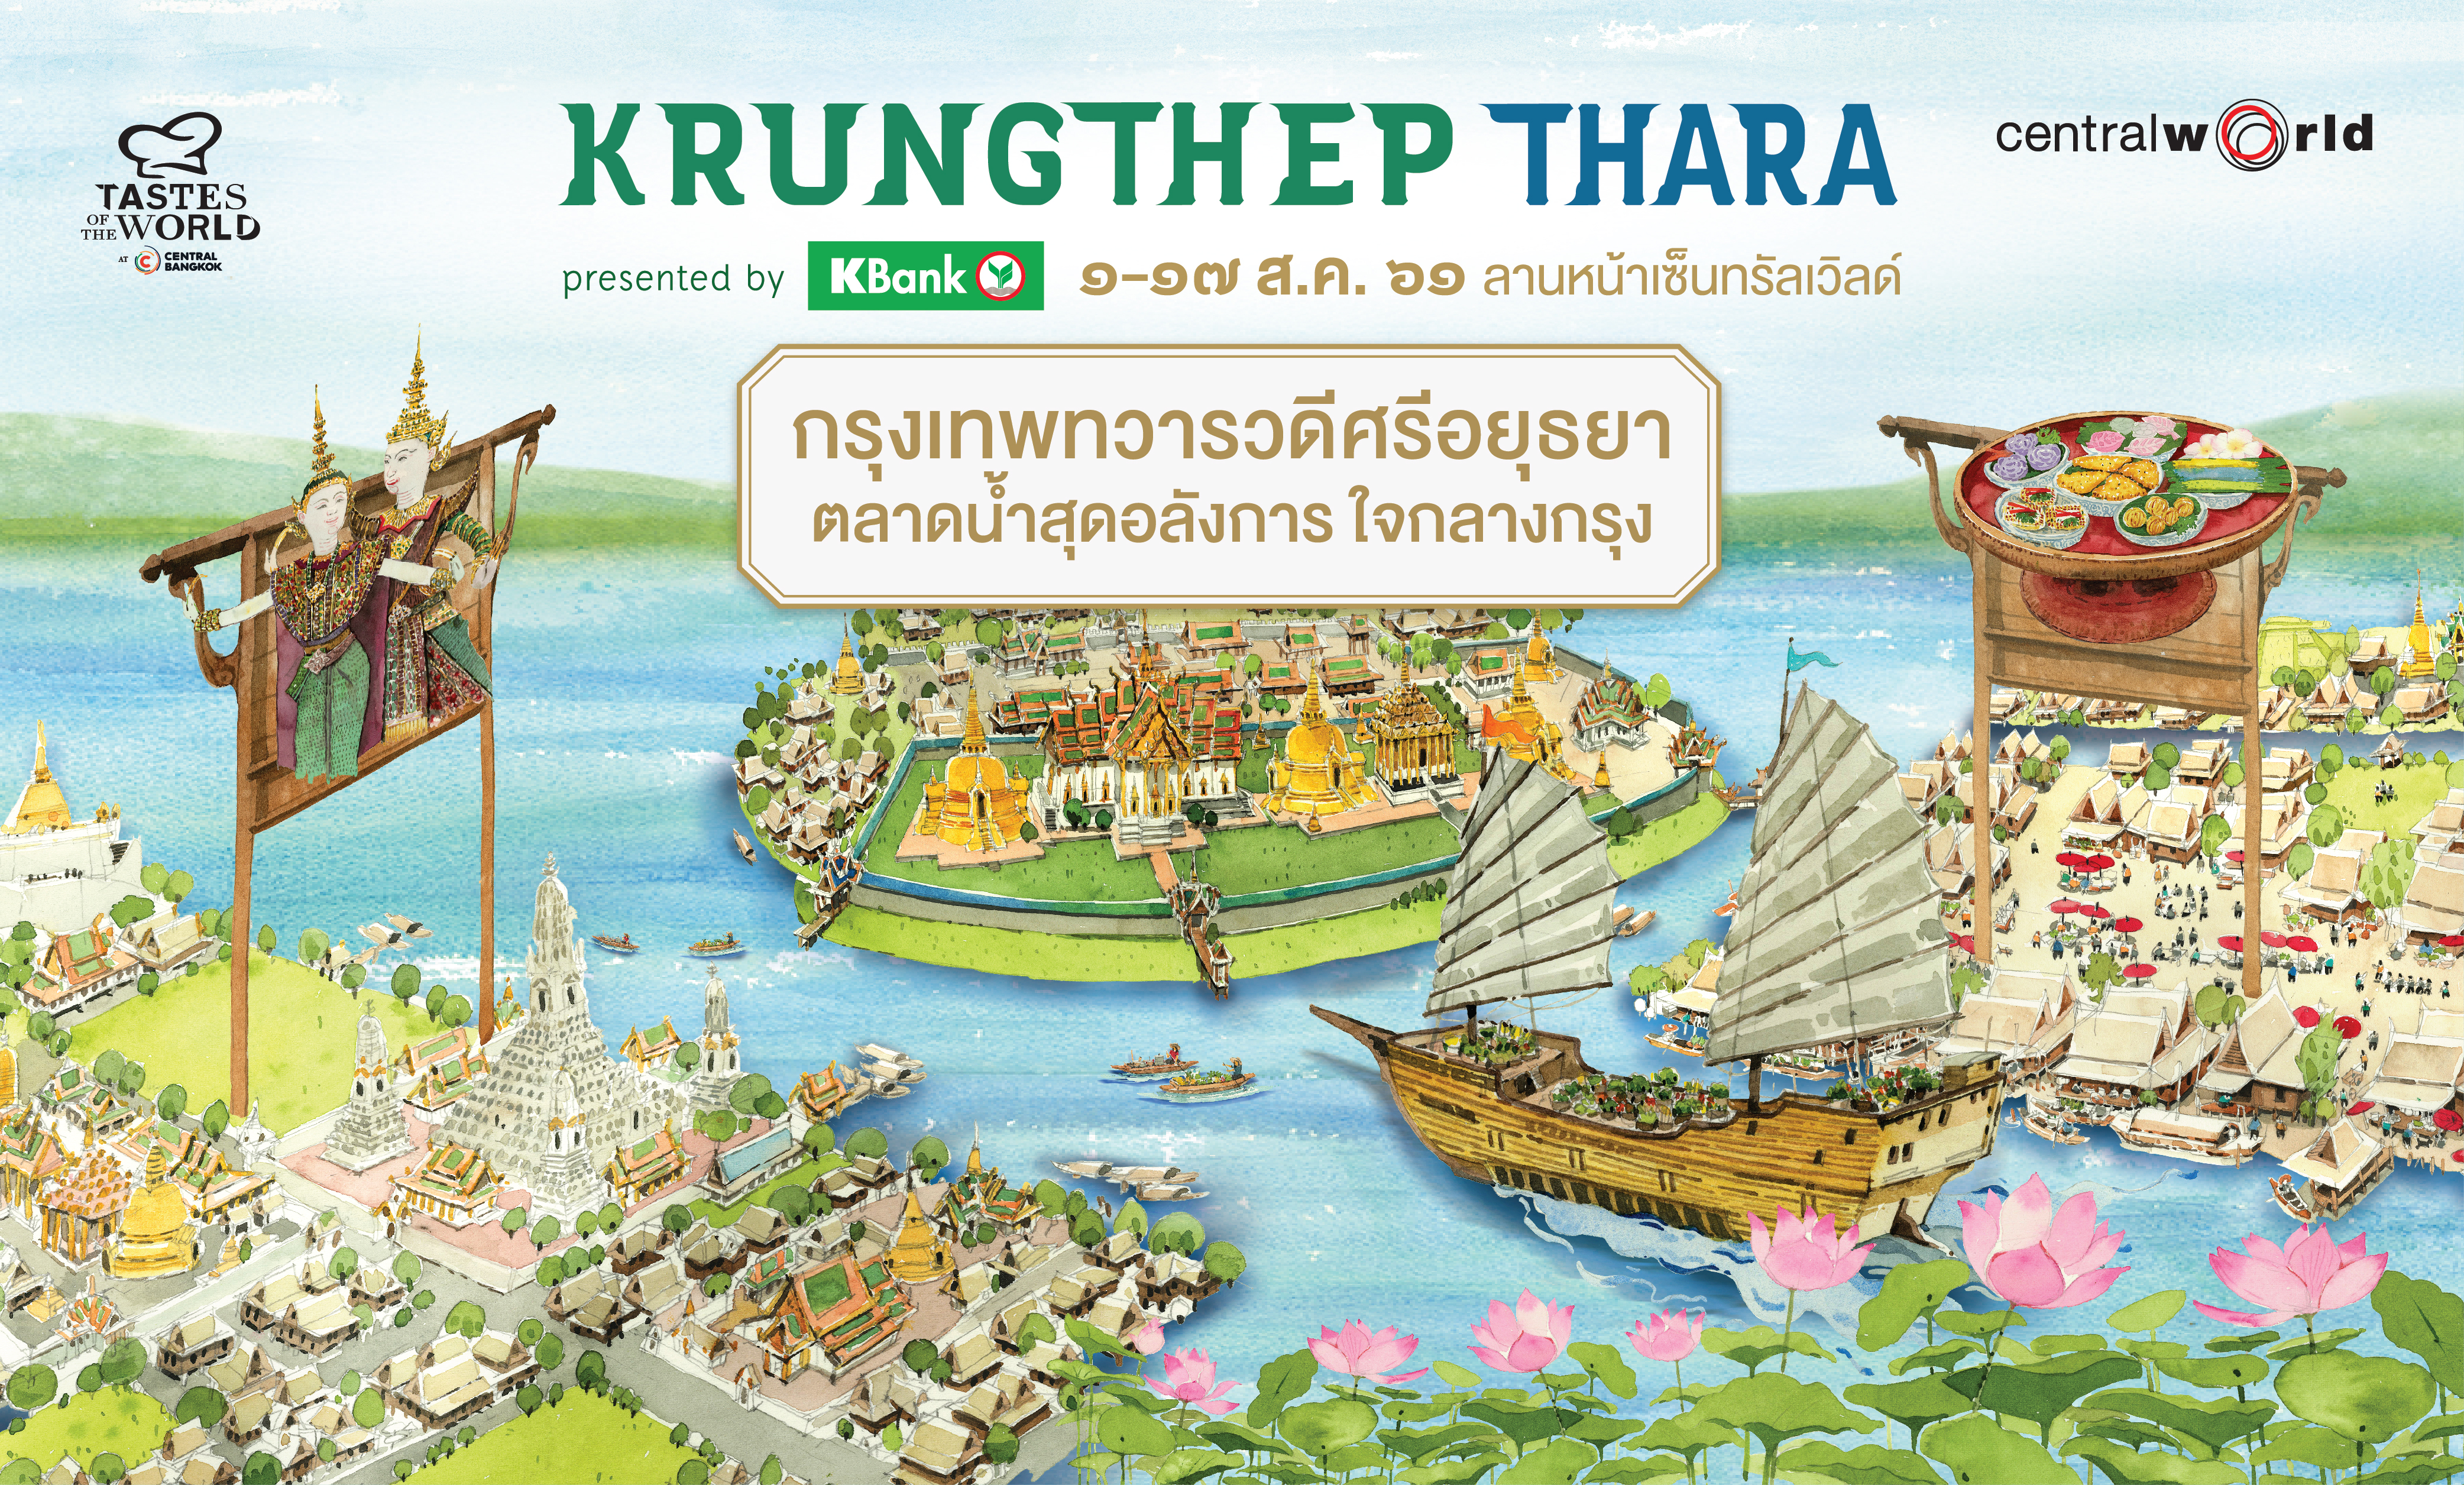 Krungthep Thara 2018 presented by kbank @ centralwOrld